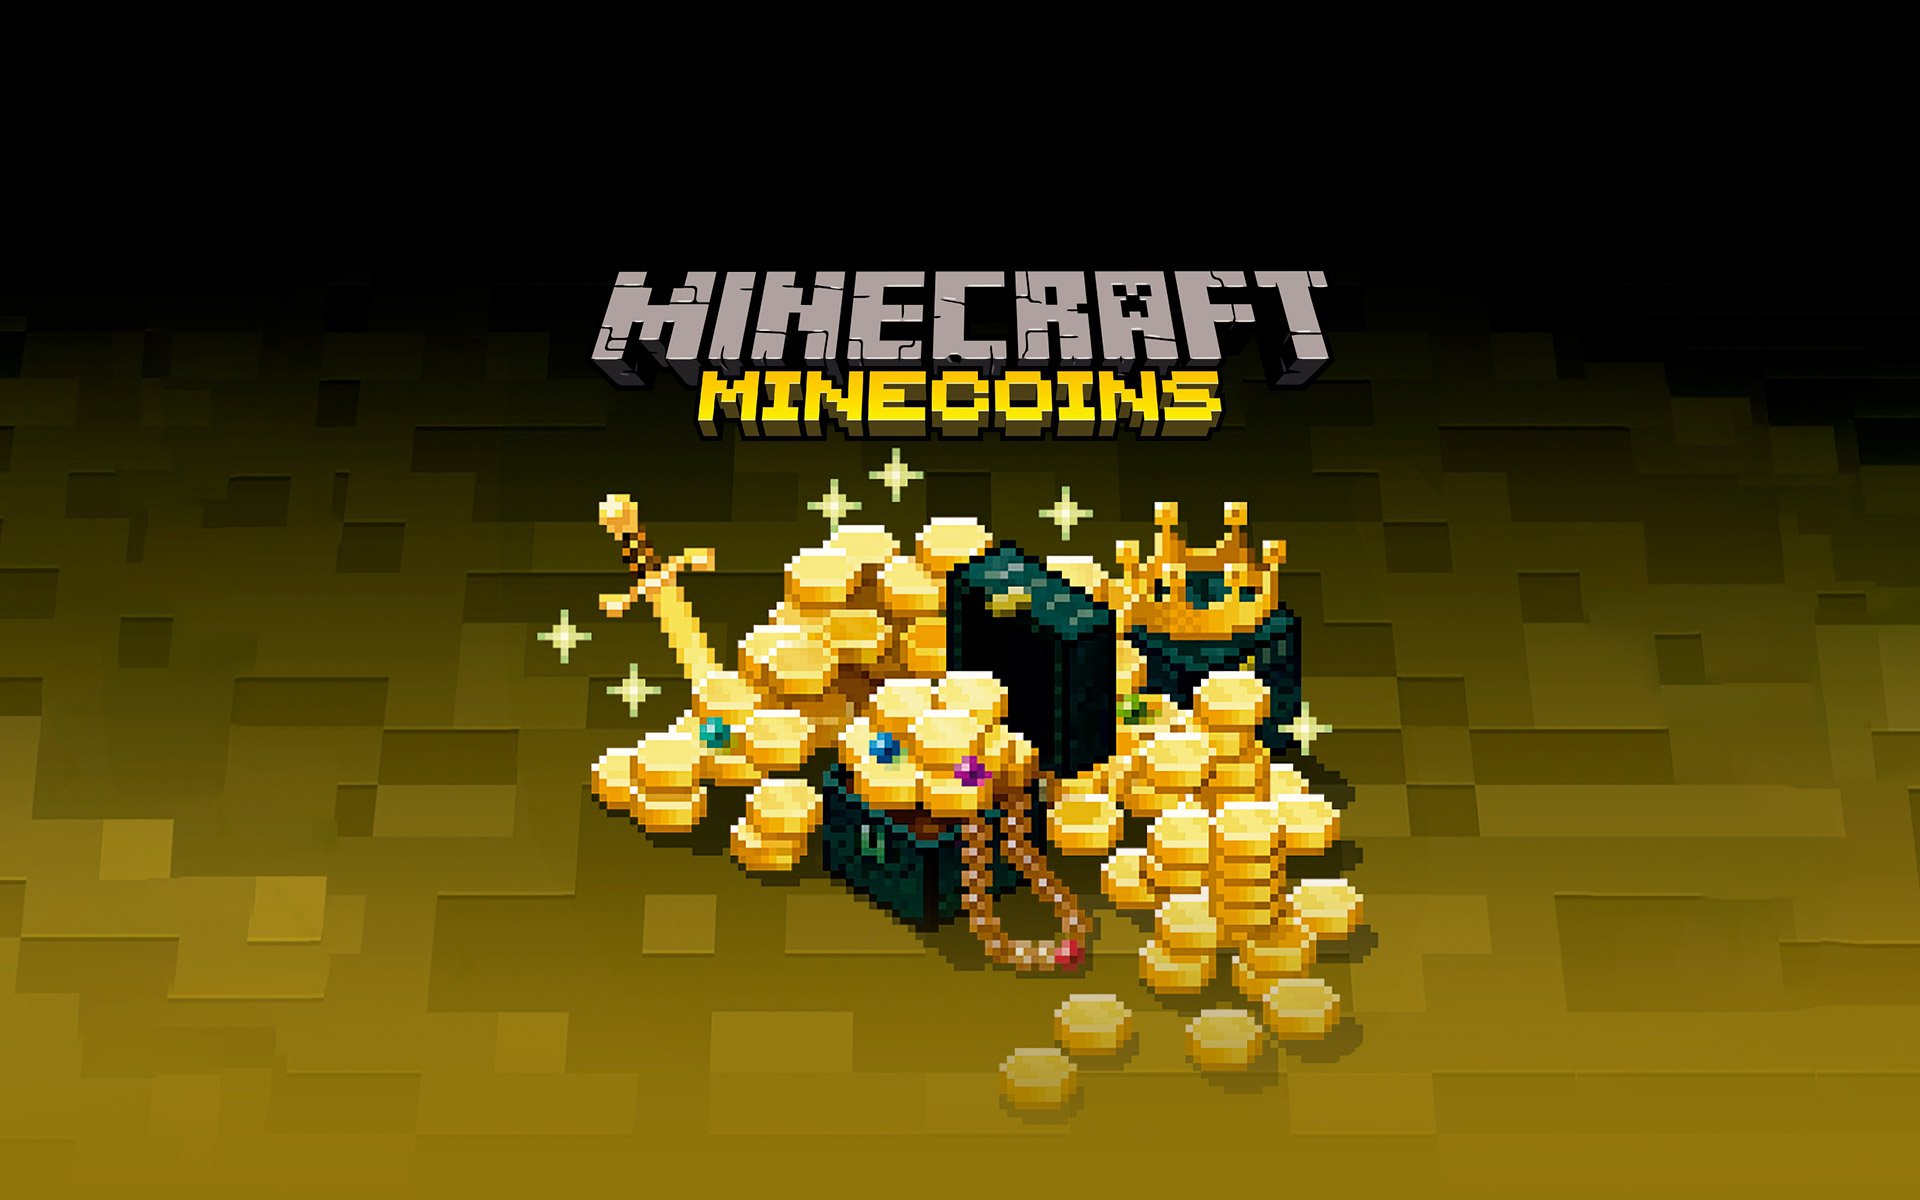 Minecraft: Minecoins Pack: 3500 Coins - Xbox One, Windows